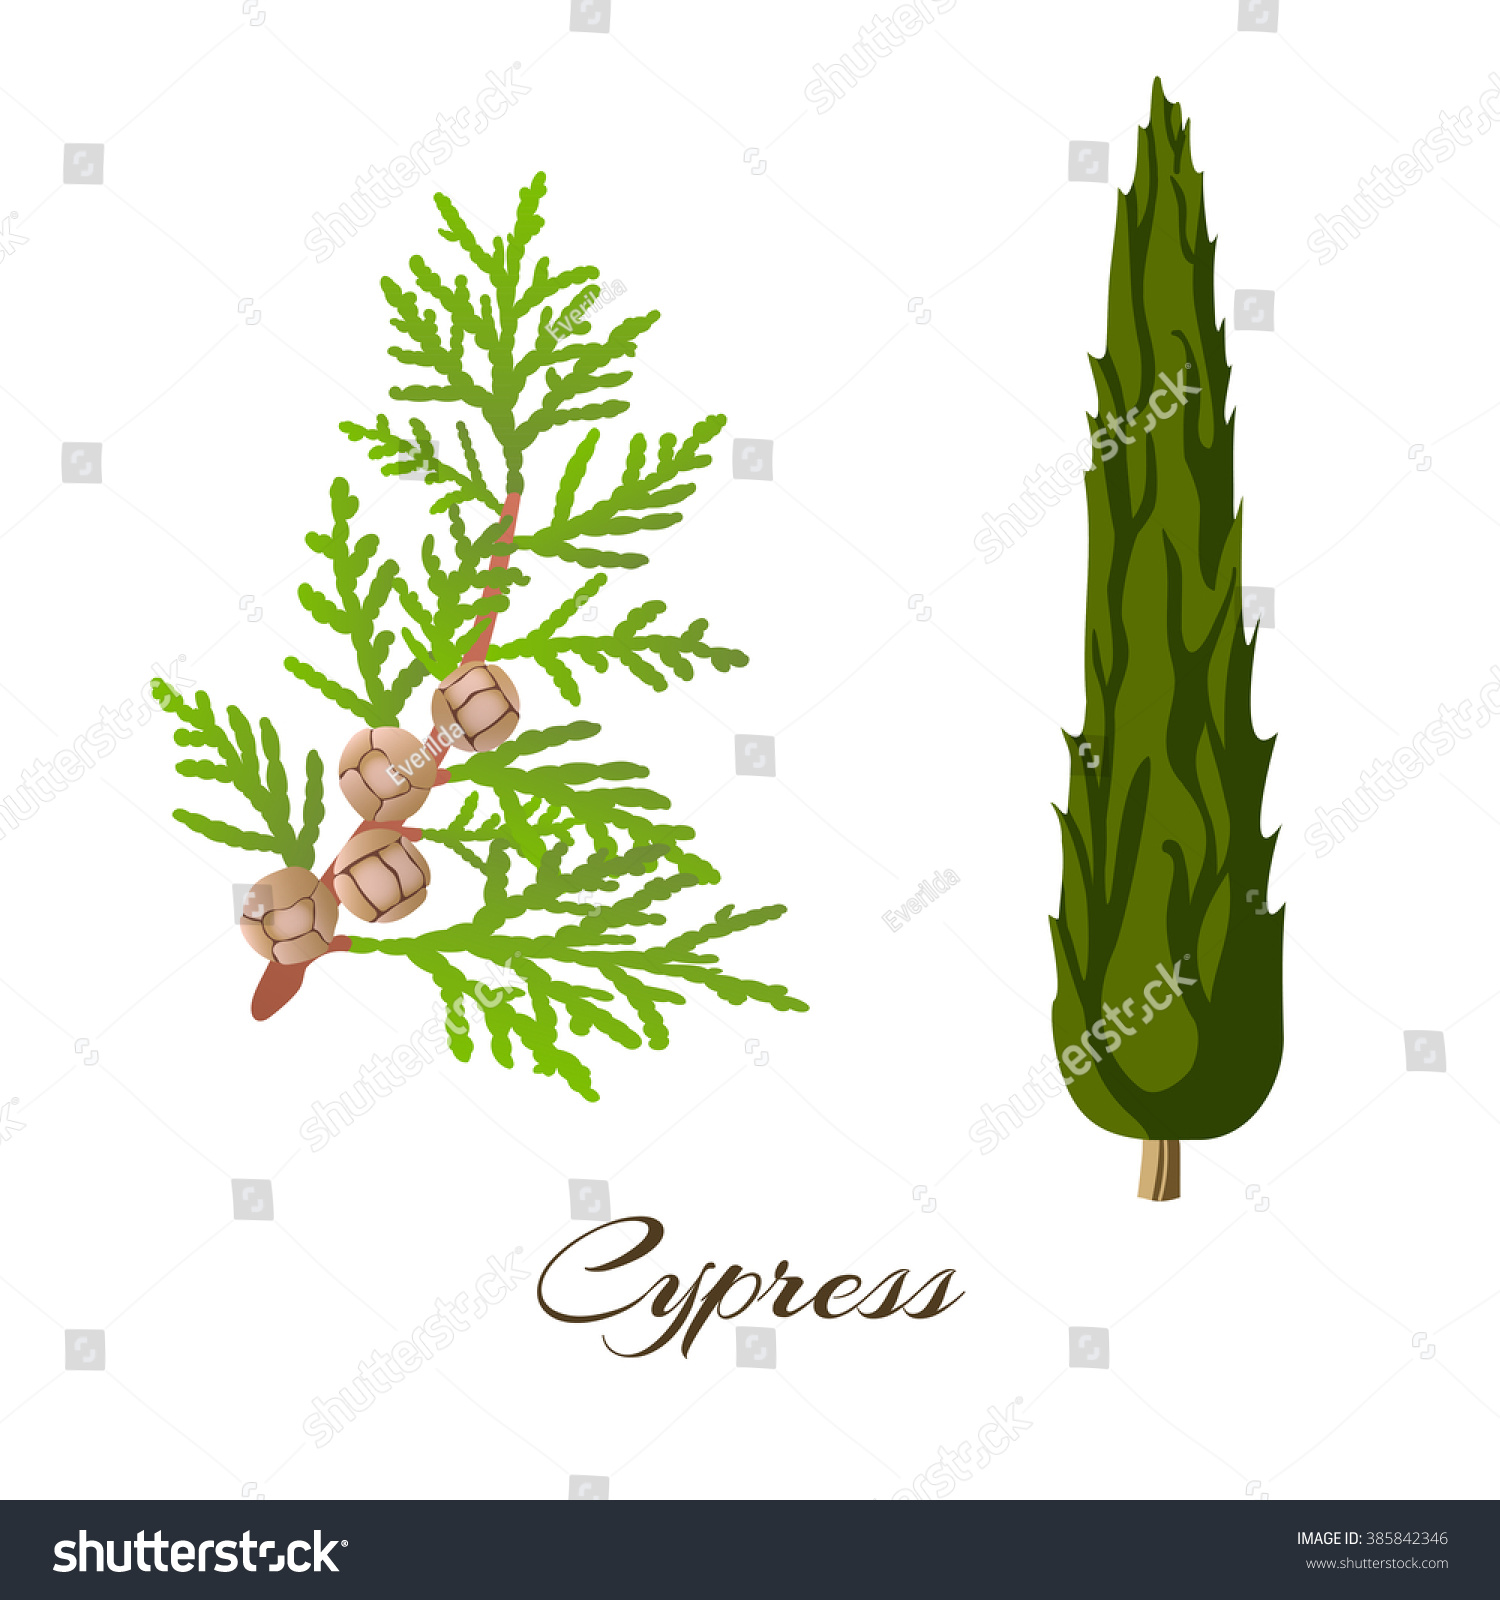 SVG of Cypress branch (Cupressus sempervirens) and tree. Vector illustration. svg